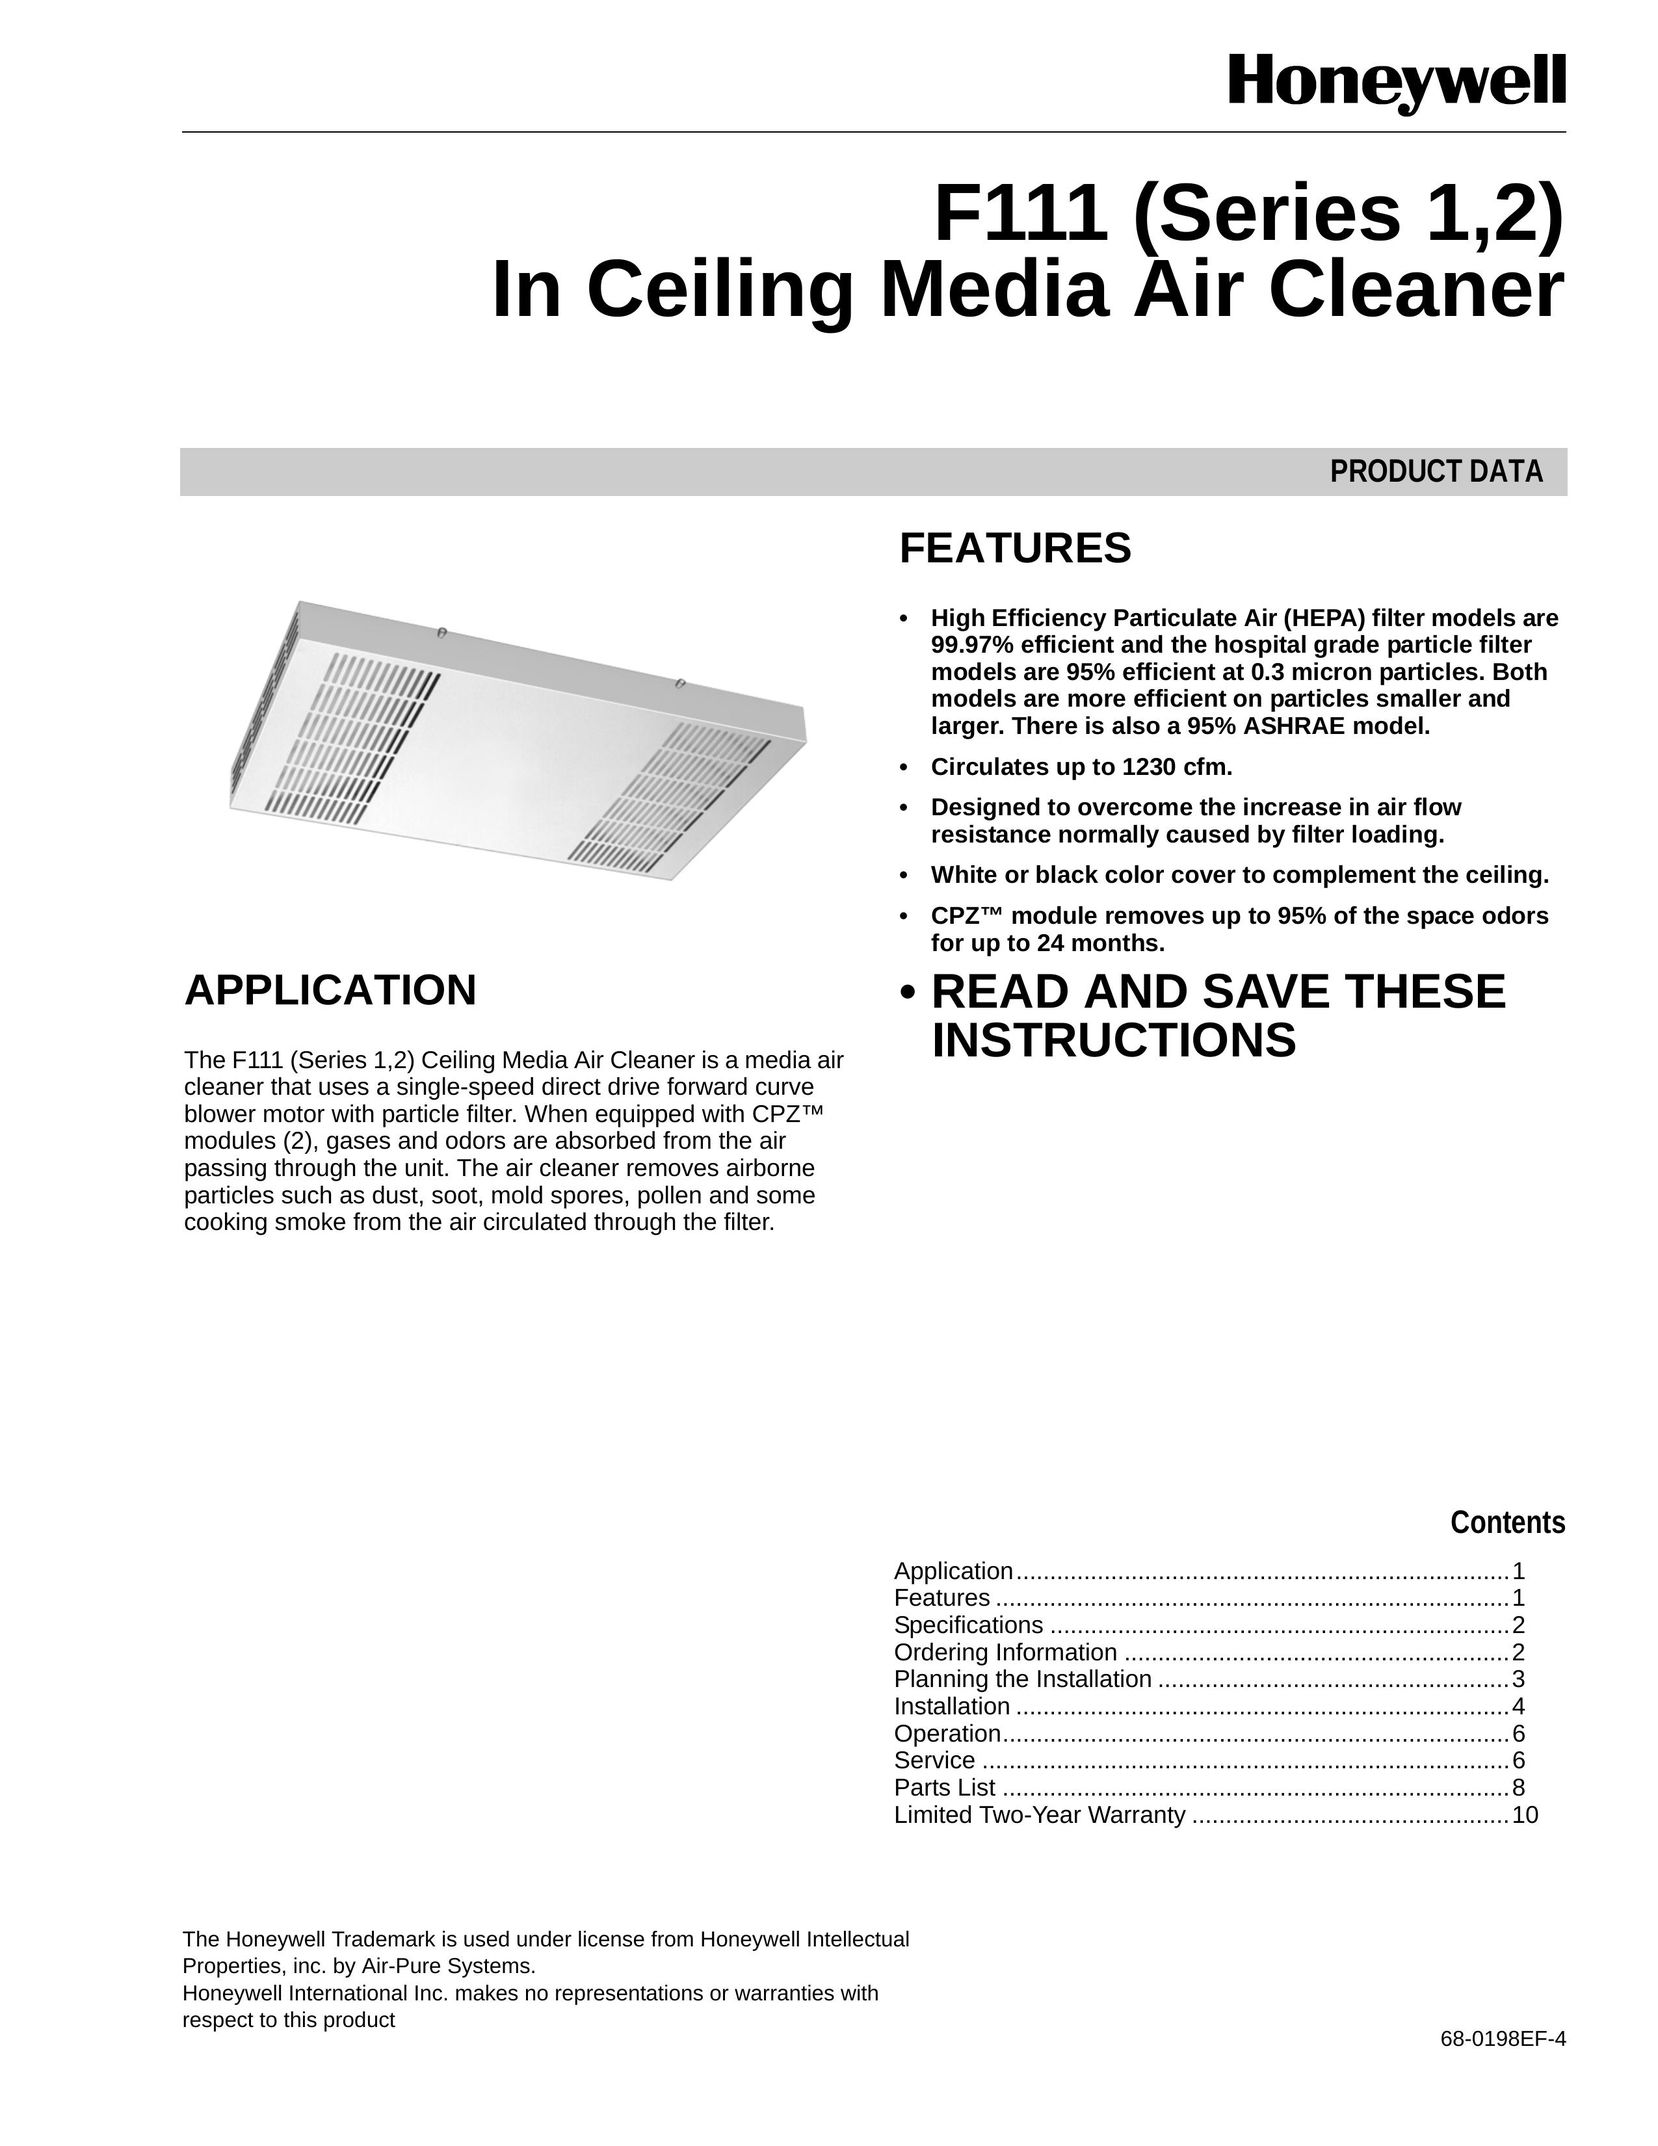 Honeywell F111 Series 2 Air Cleaner User Manual